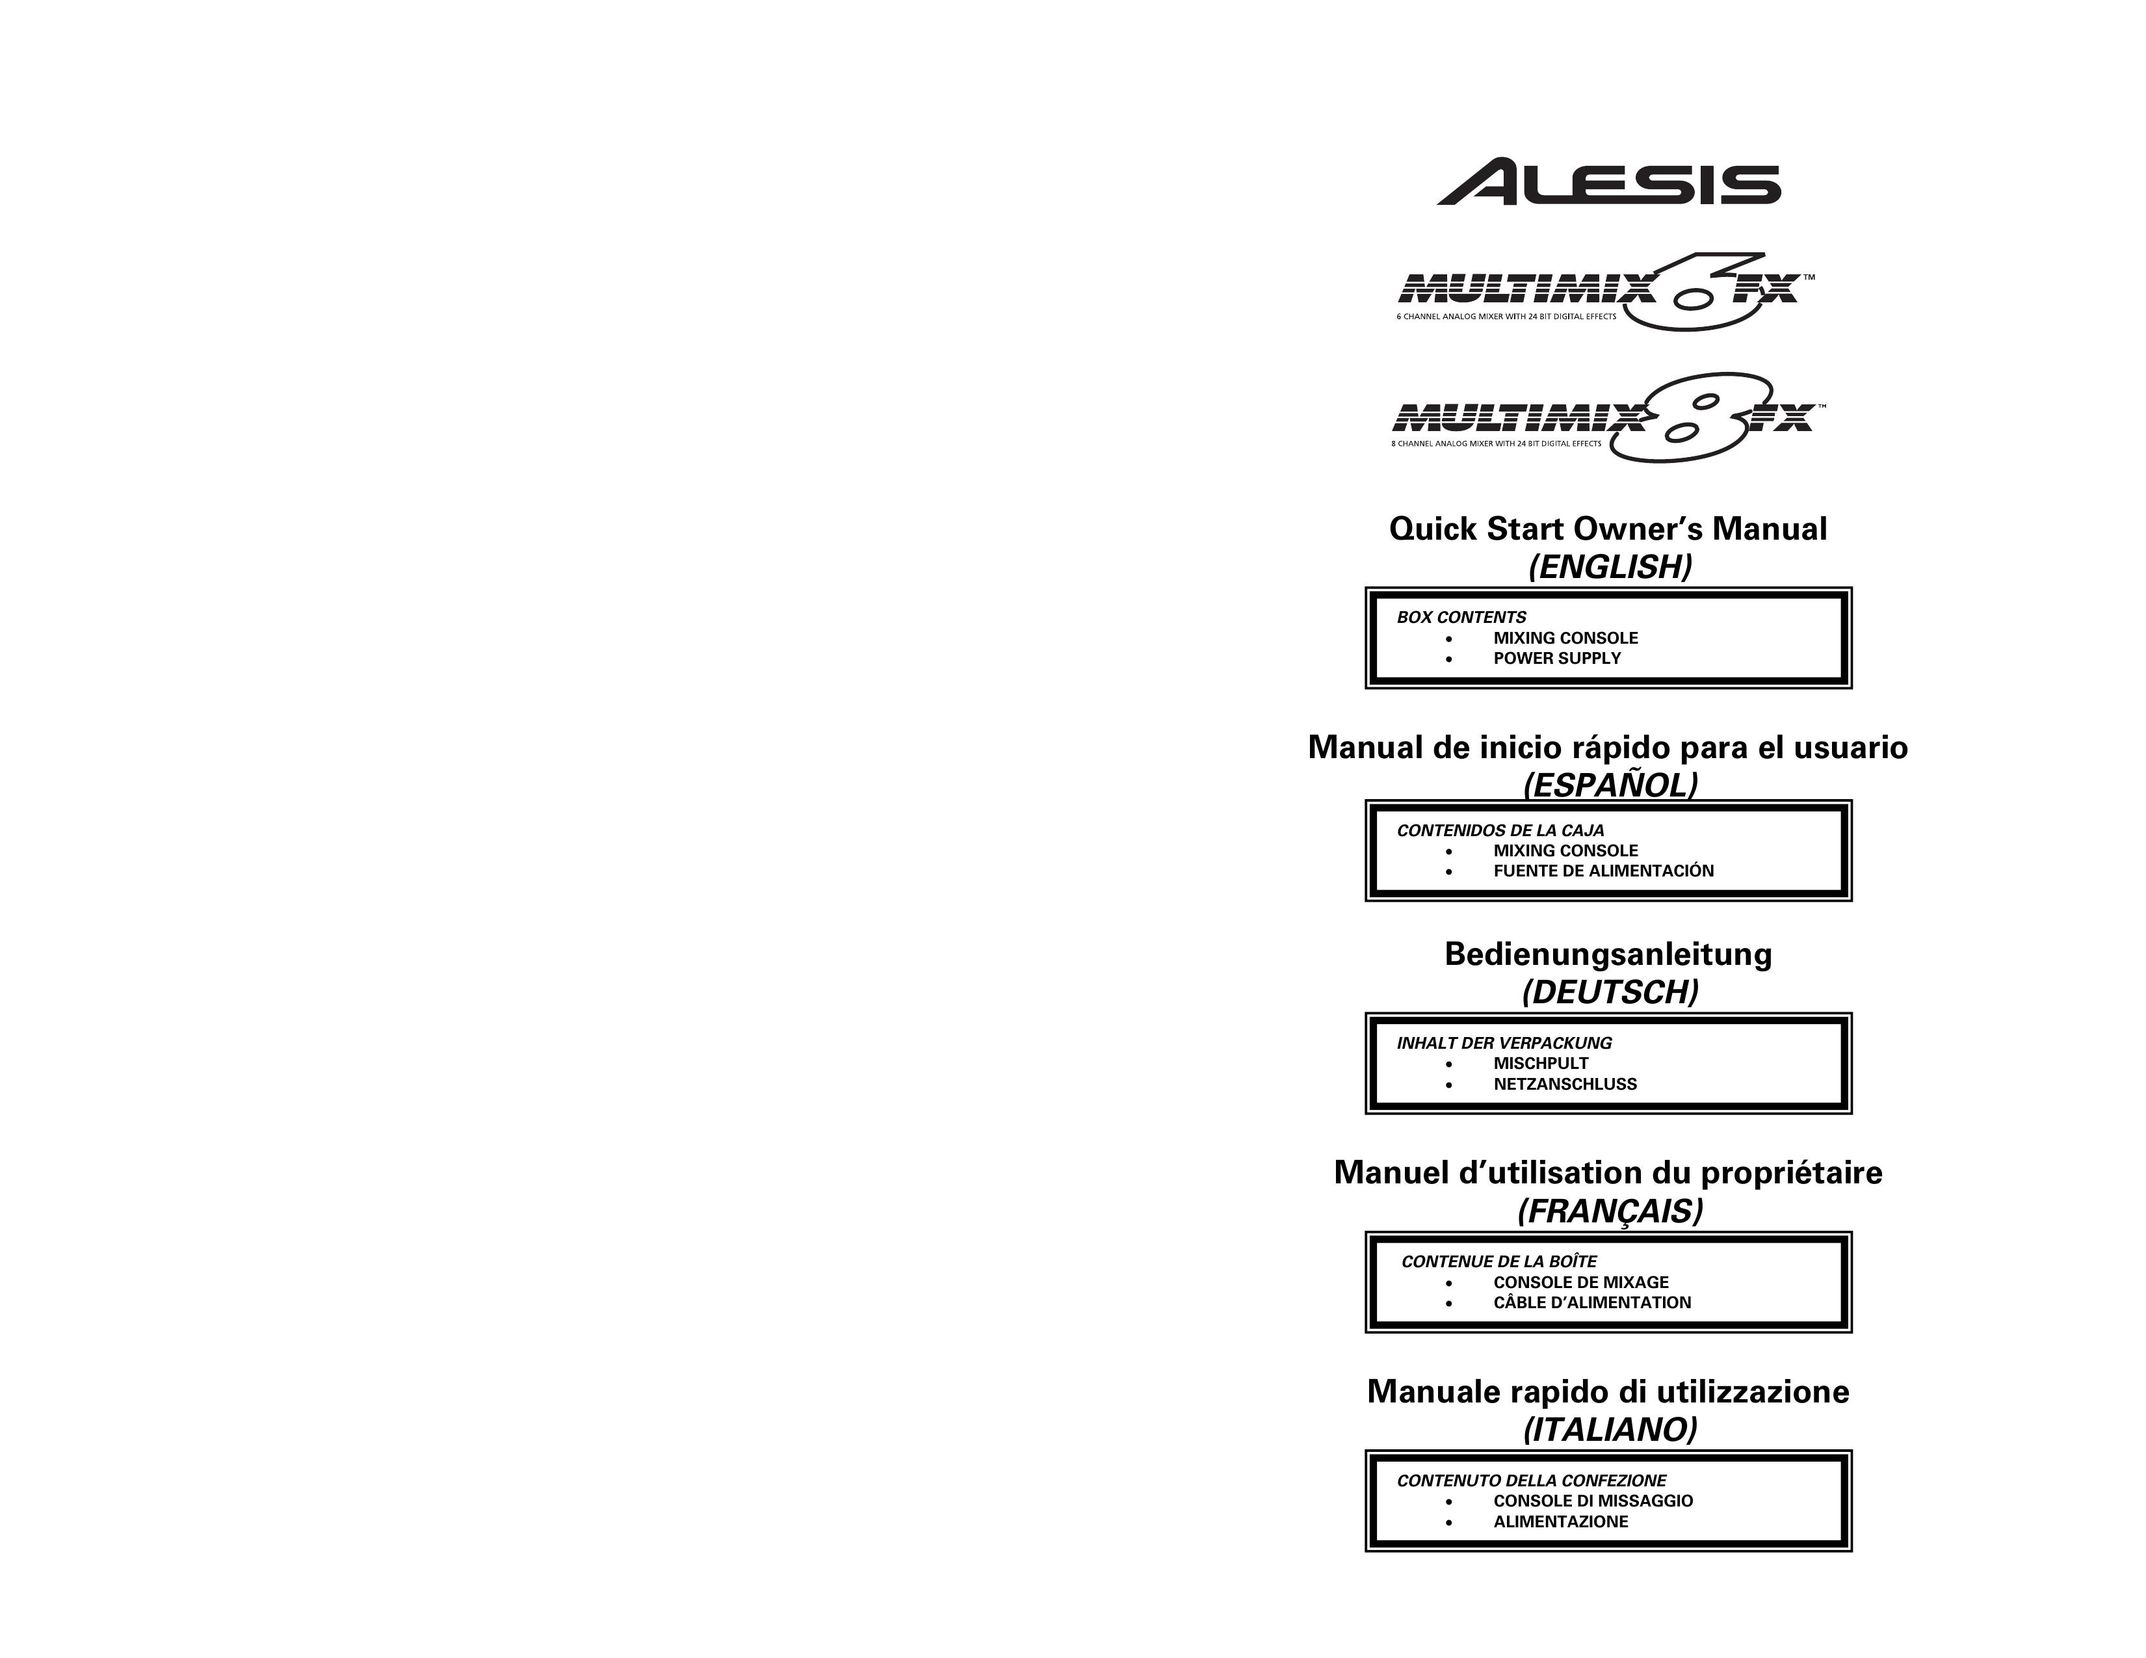 Alesis 6FX TV Video Accessories User Manual